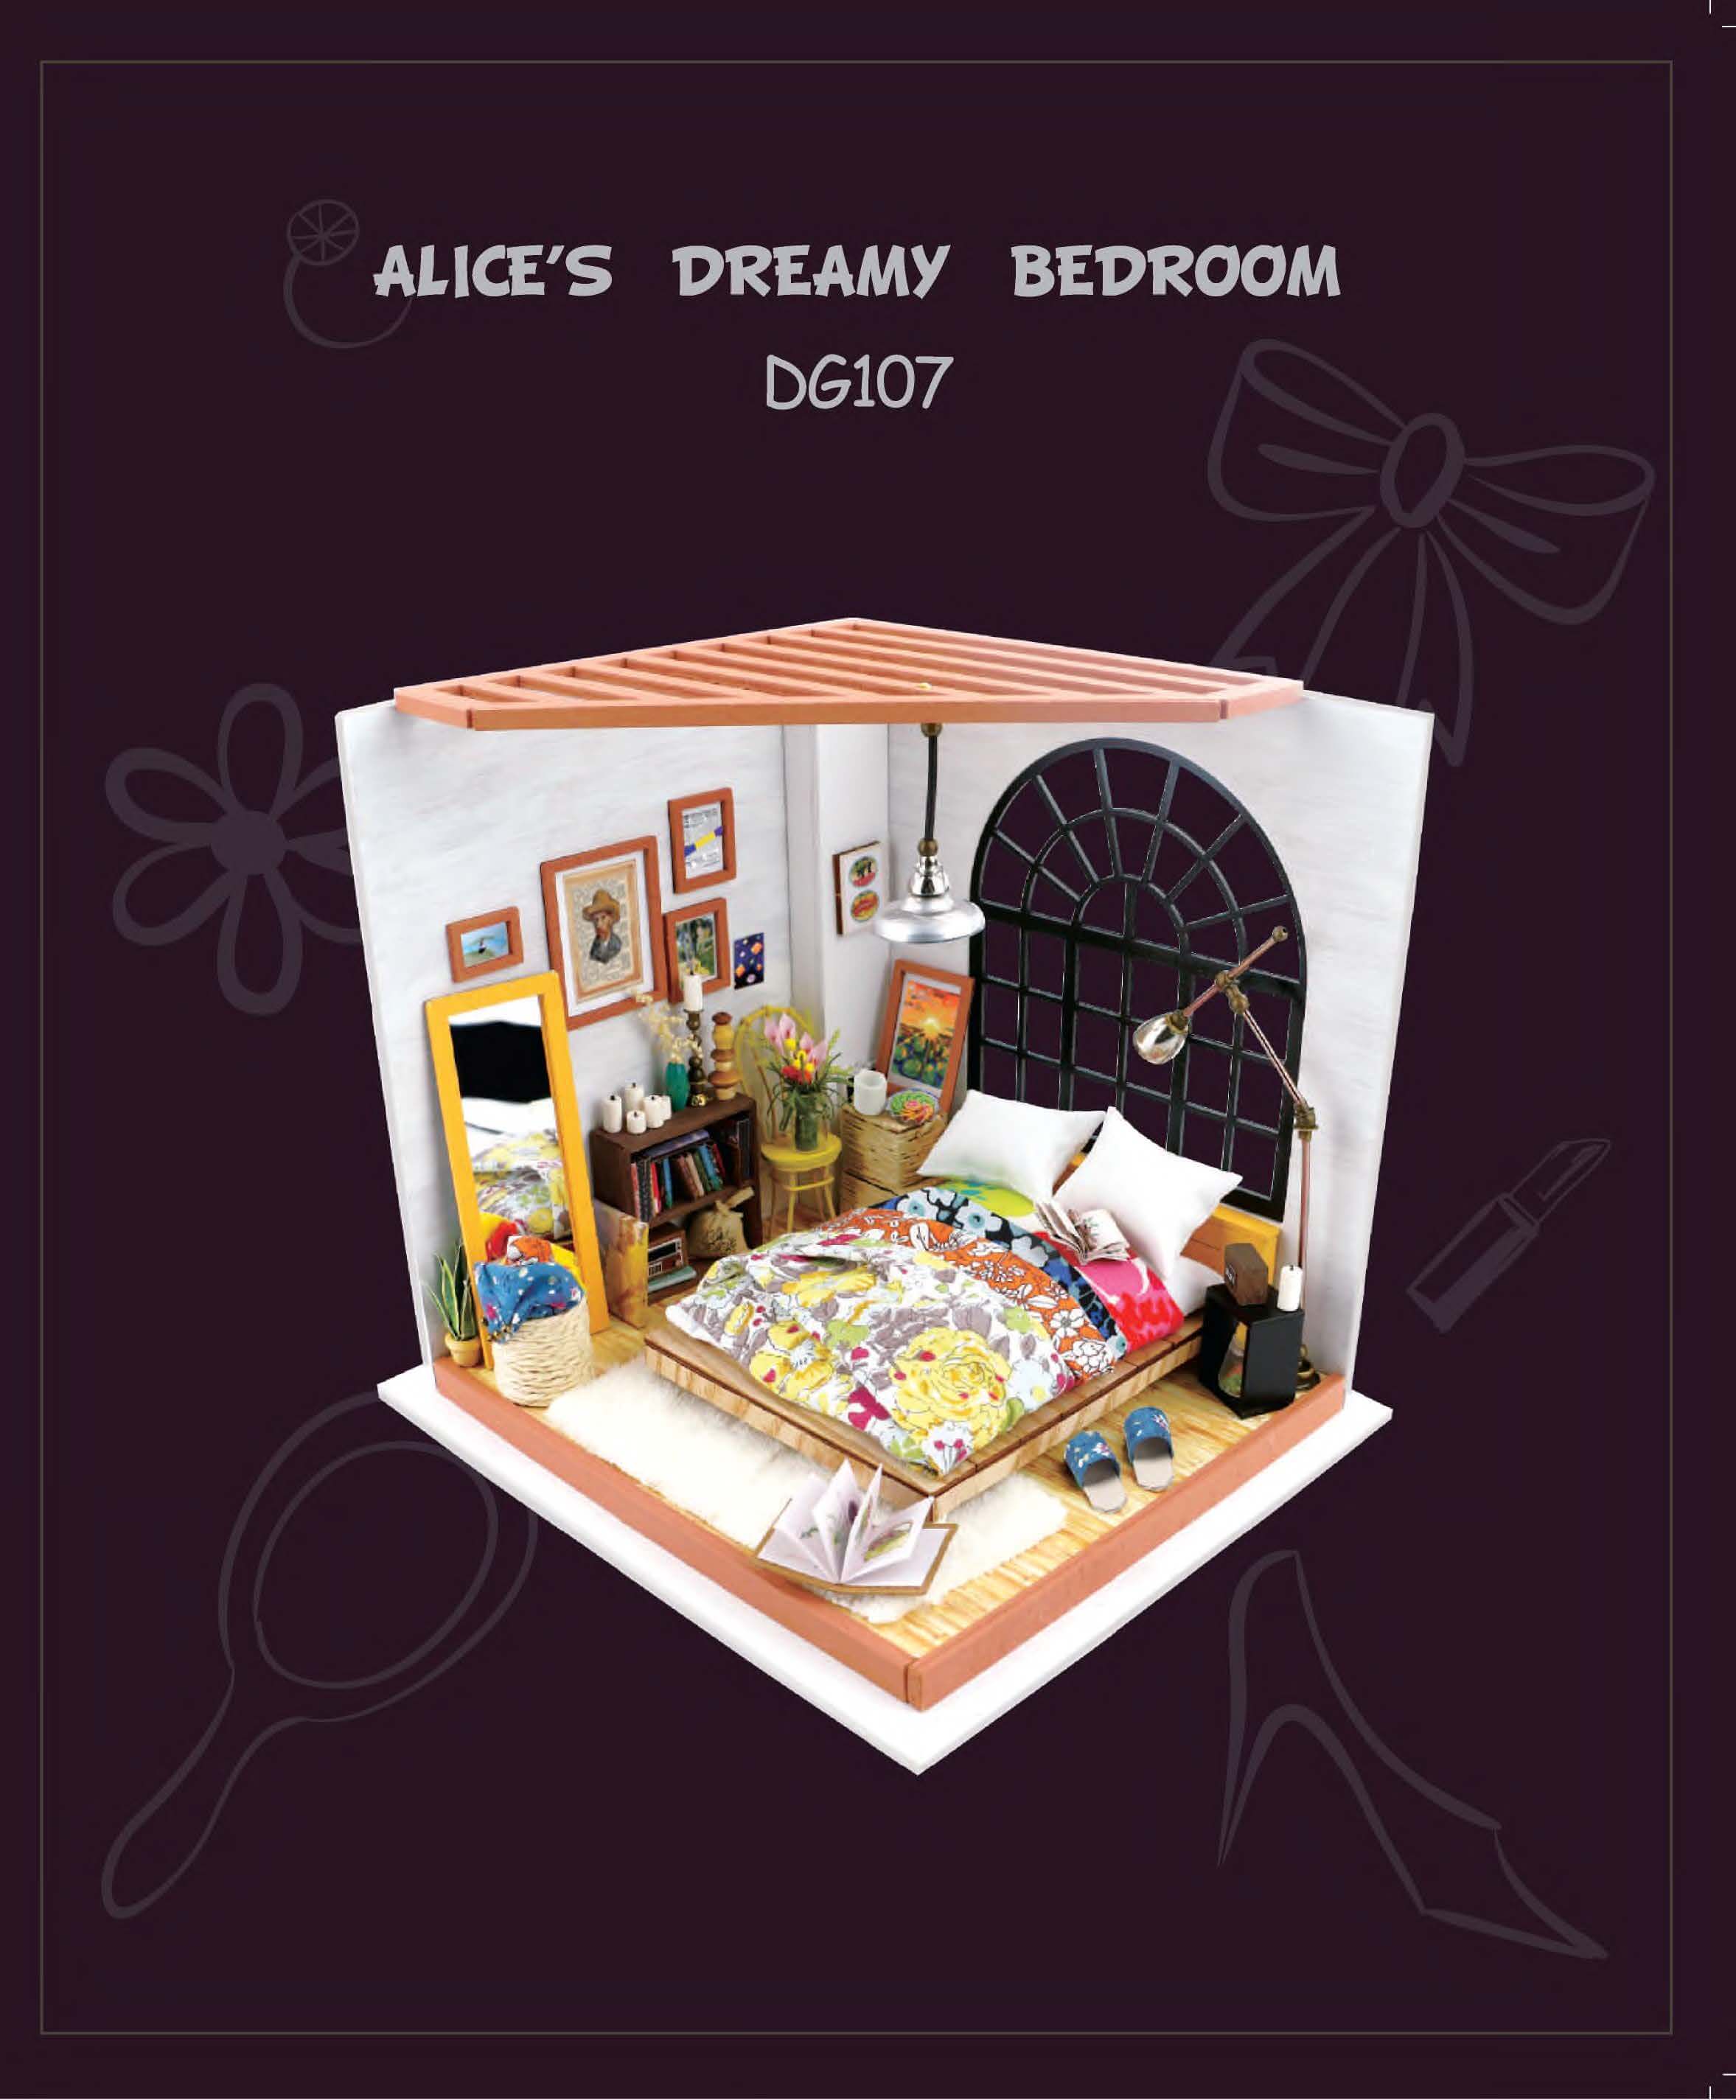 RDG107 - Alice's Dreamy Bedroom Manual